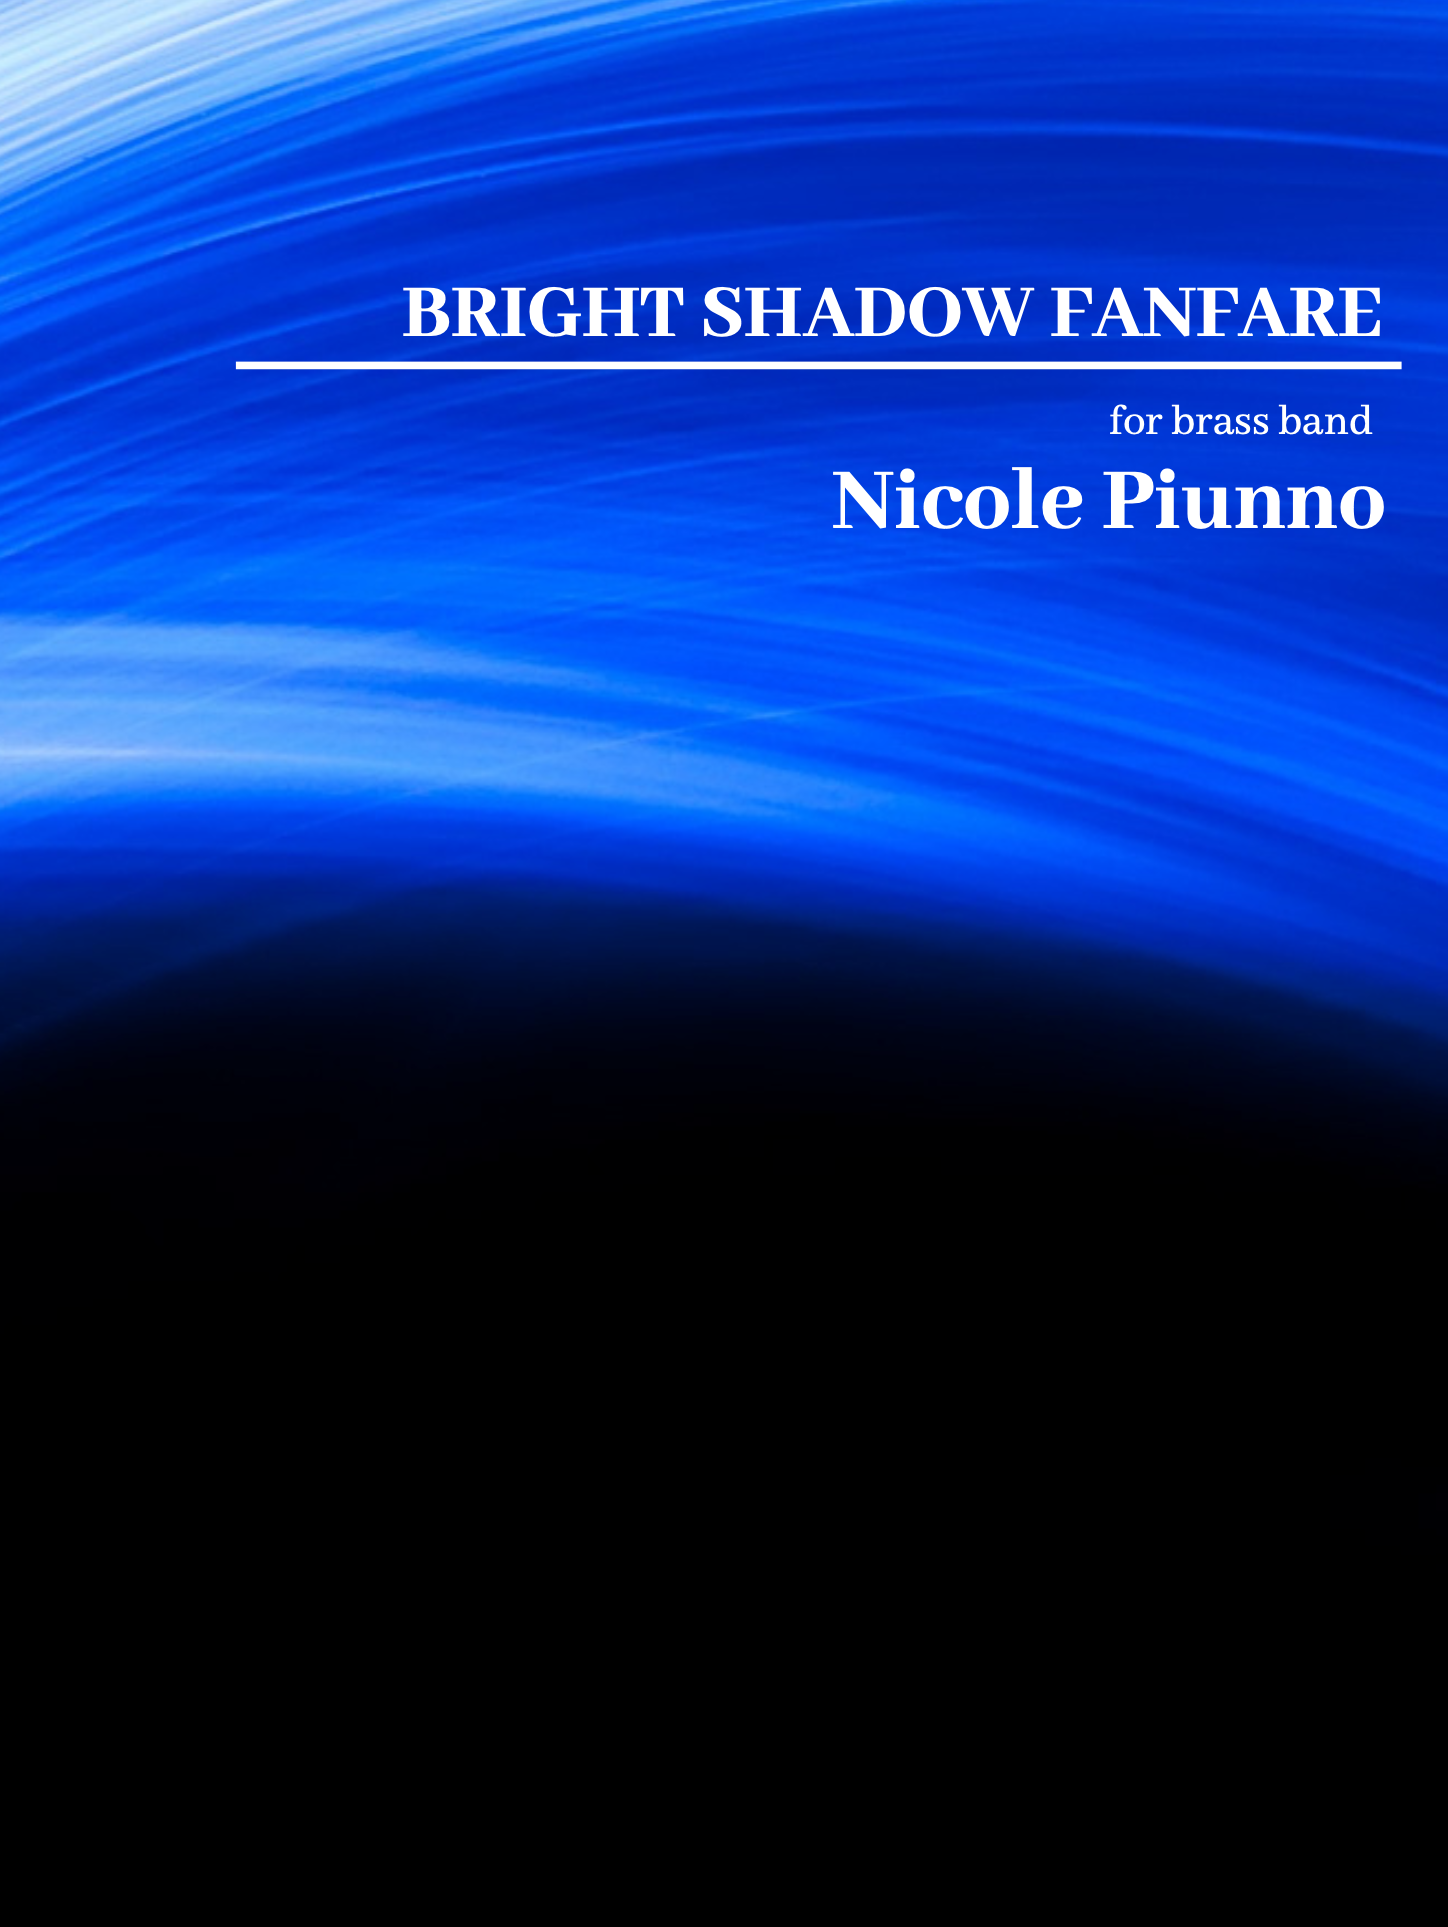 Bright Shadow Fanfare by Nicole Piunno